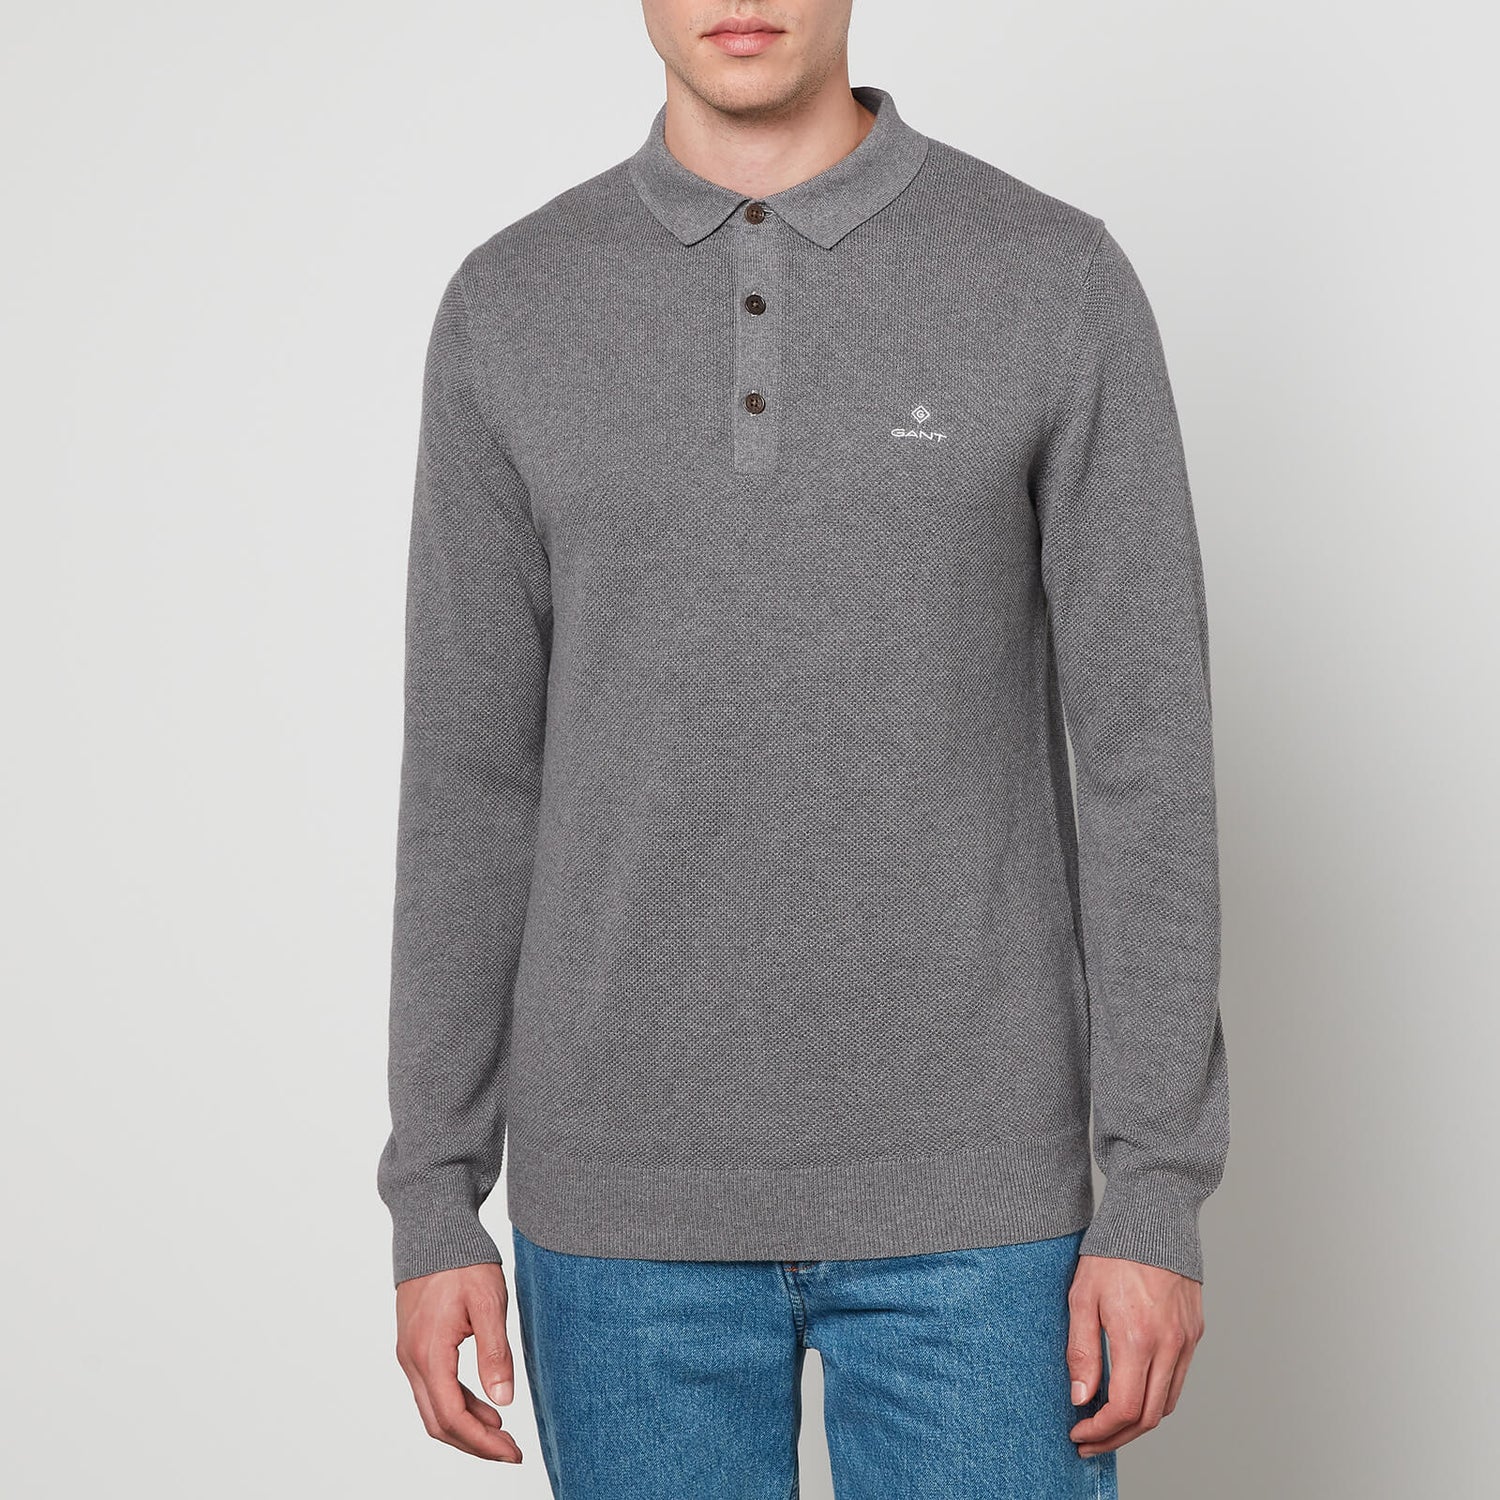 GANT Cotton Piqué-Knit Polo Shirt - S